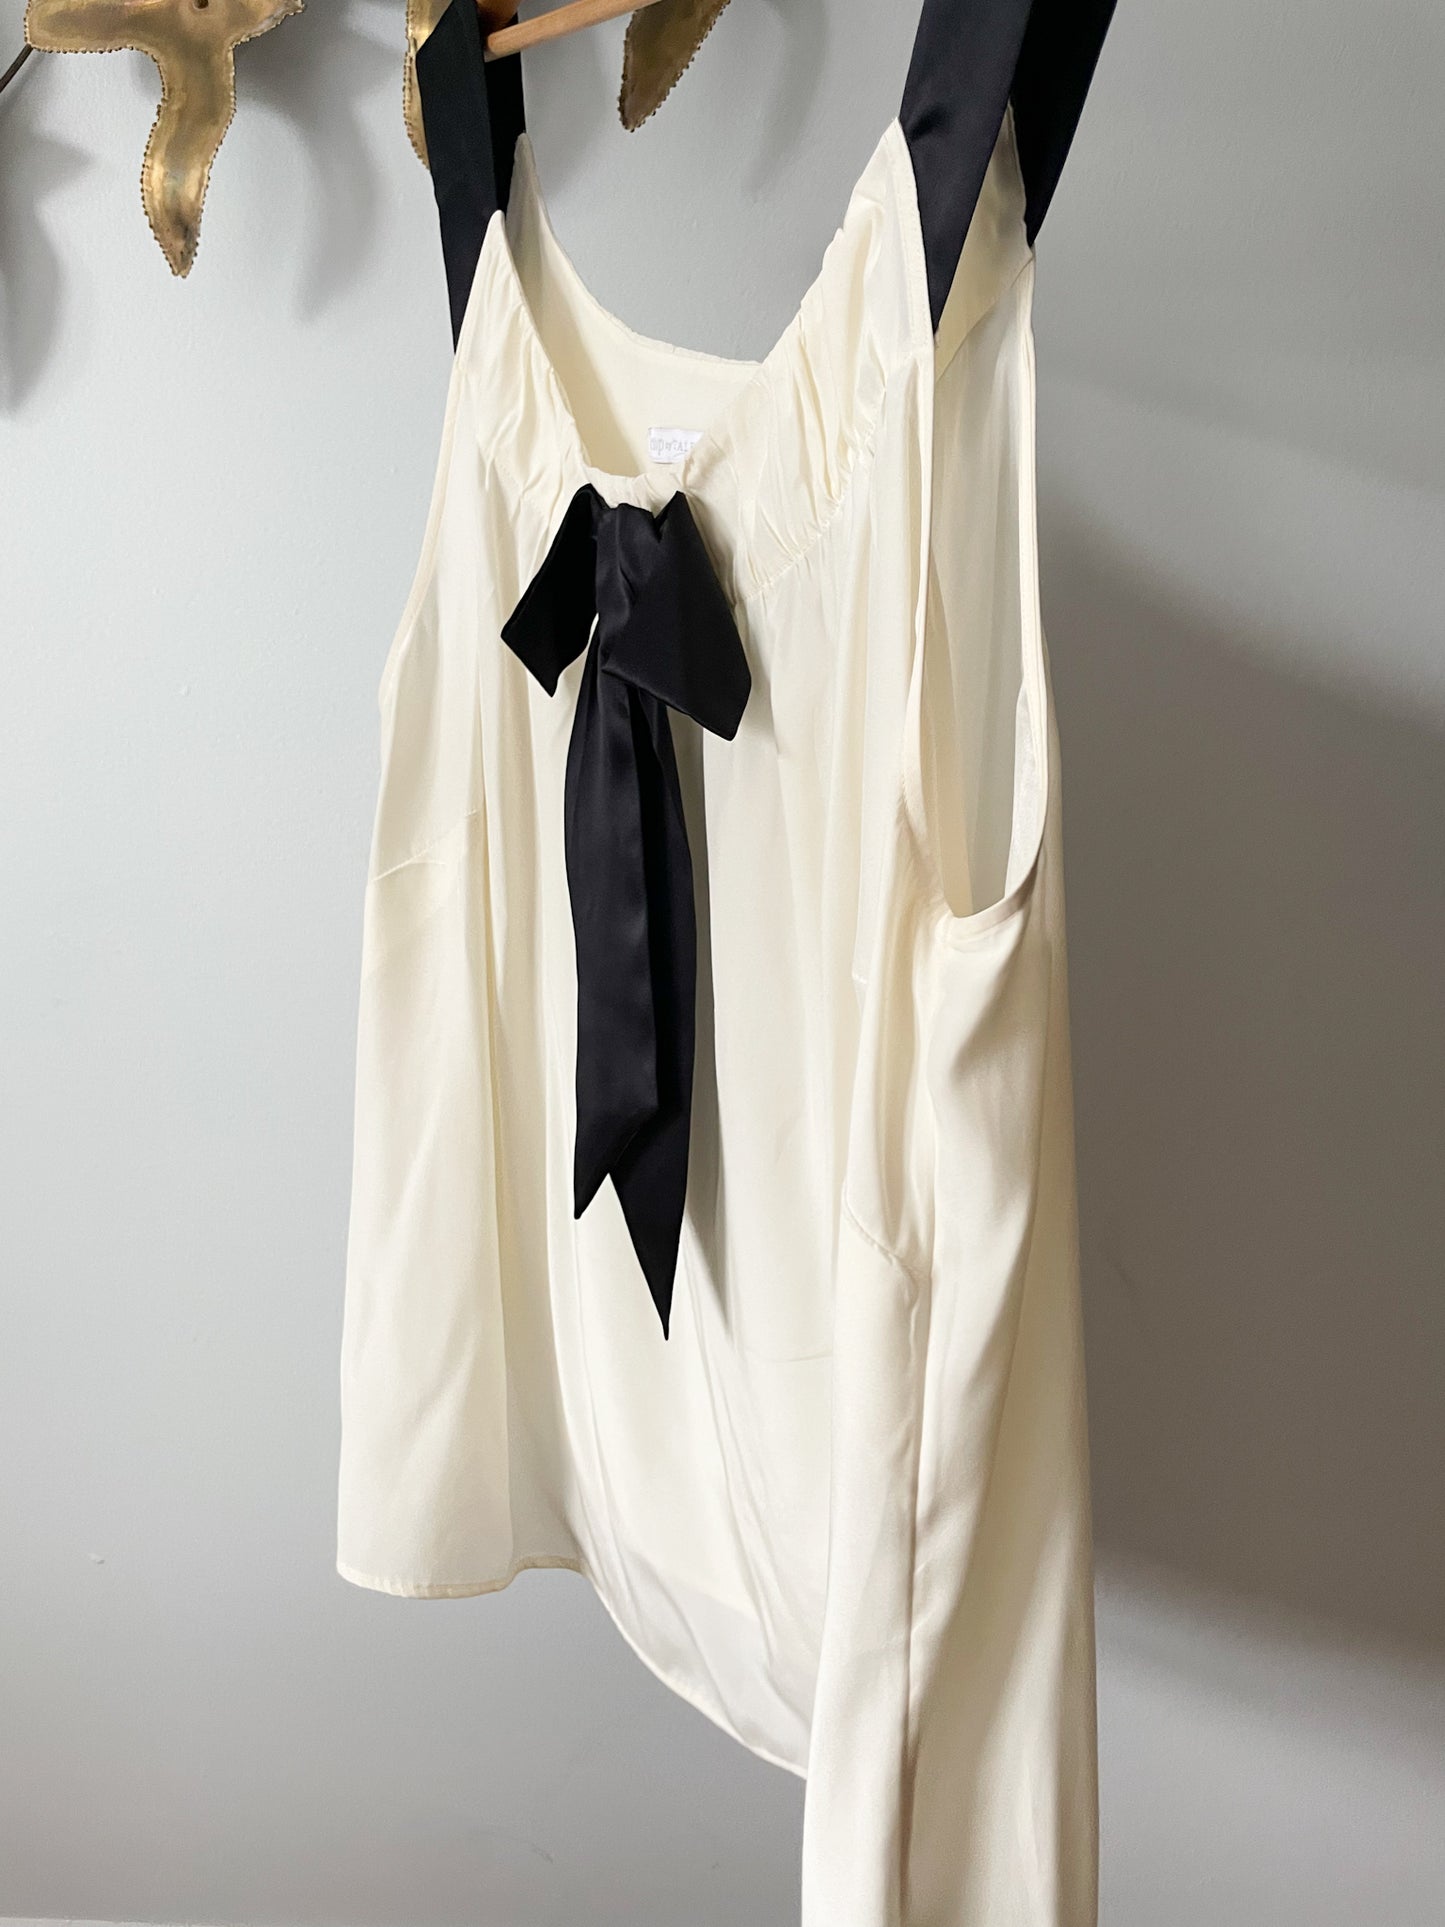 RSVP by Talbots Black White 100% Silk Bow Sleeveless Top - 3X